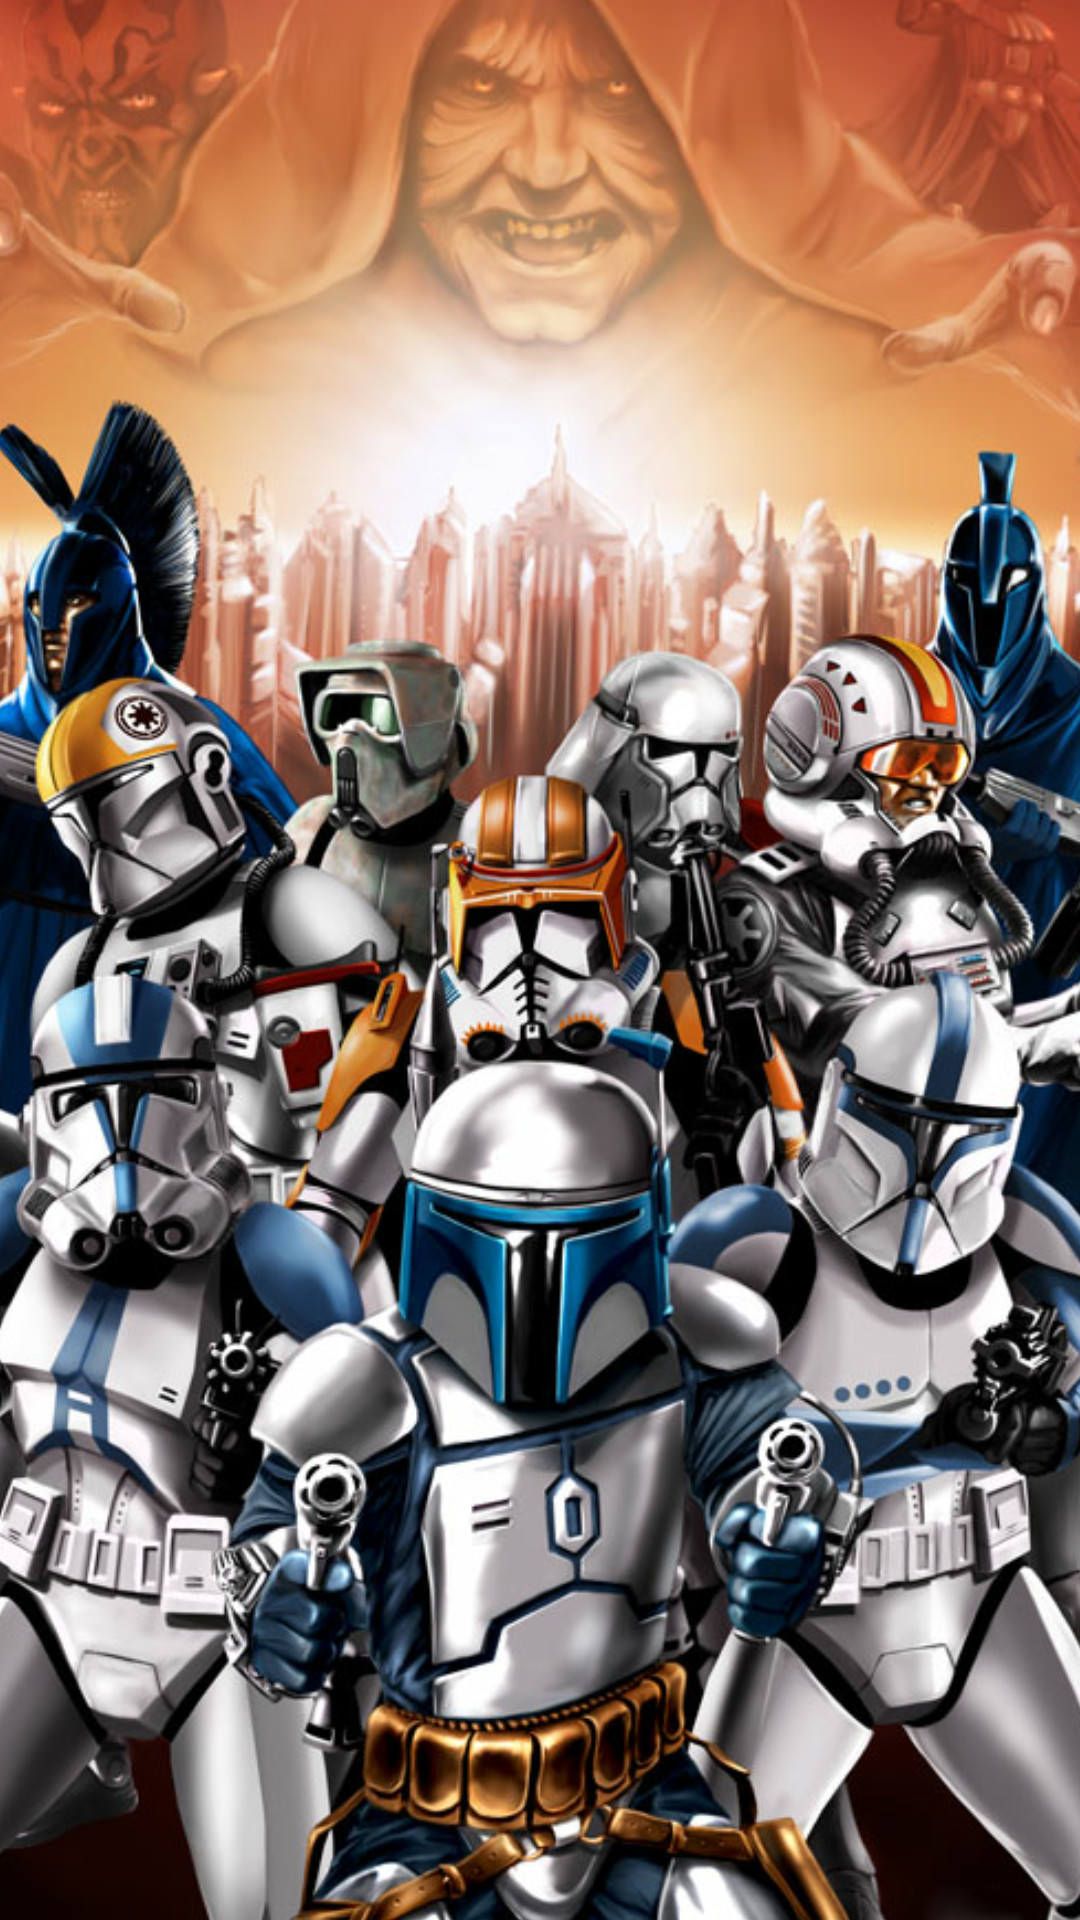 Epic Star Wars Battlefront Wallpaper HD. Star wars picture, Star wars art, Star wars image